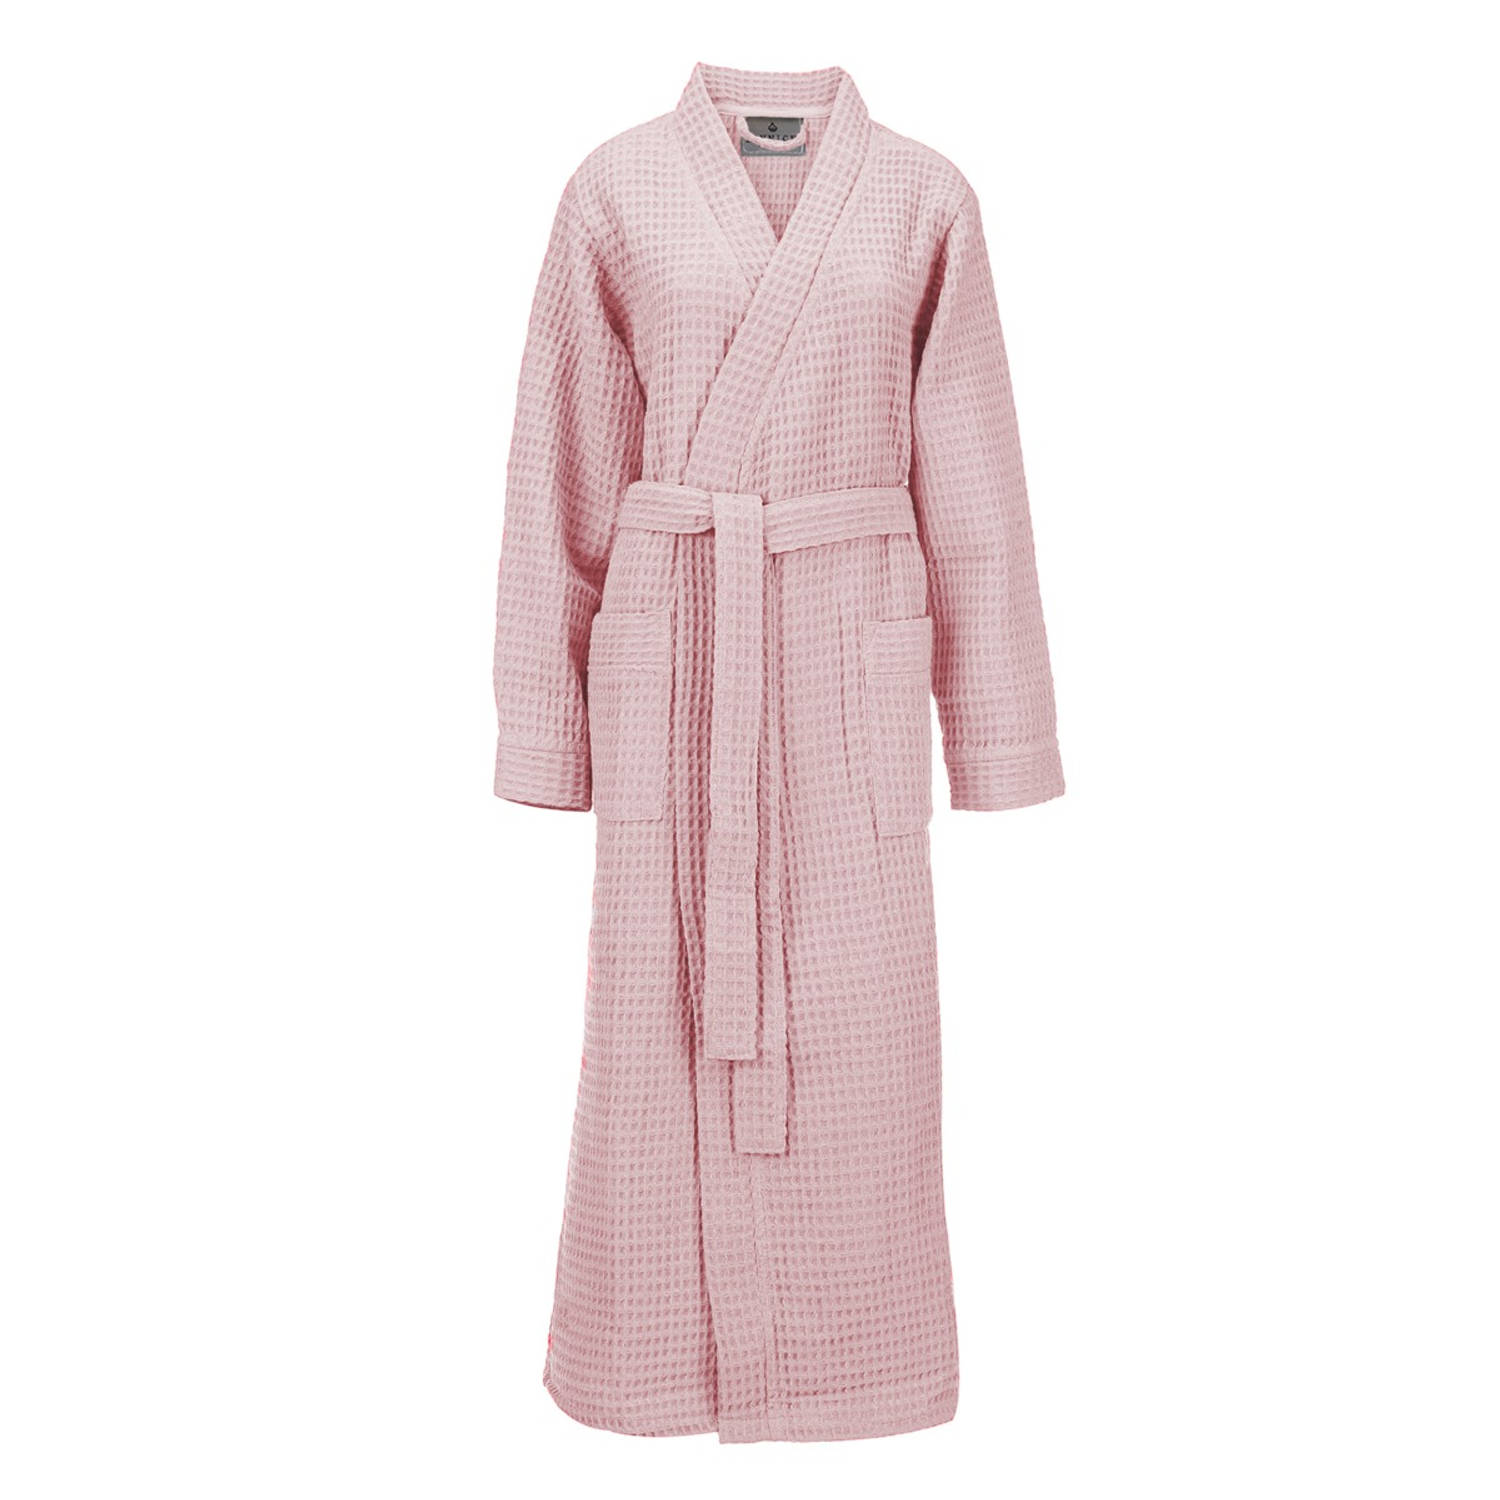 LINNICK Wafel Badjas - Maat M - Light Pink - Sauna badjas - 100% Katoen Badjas Dames - Badjas Heren